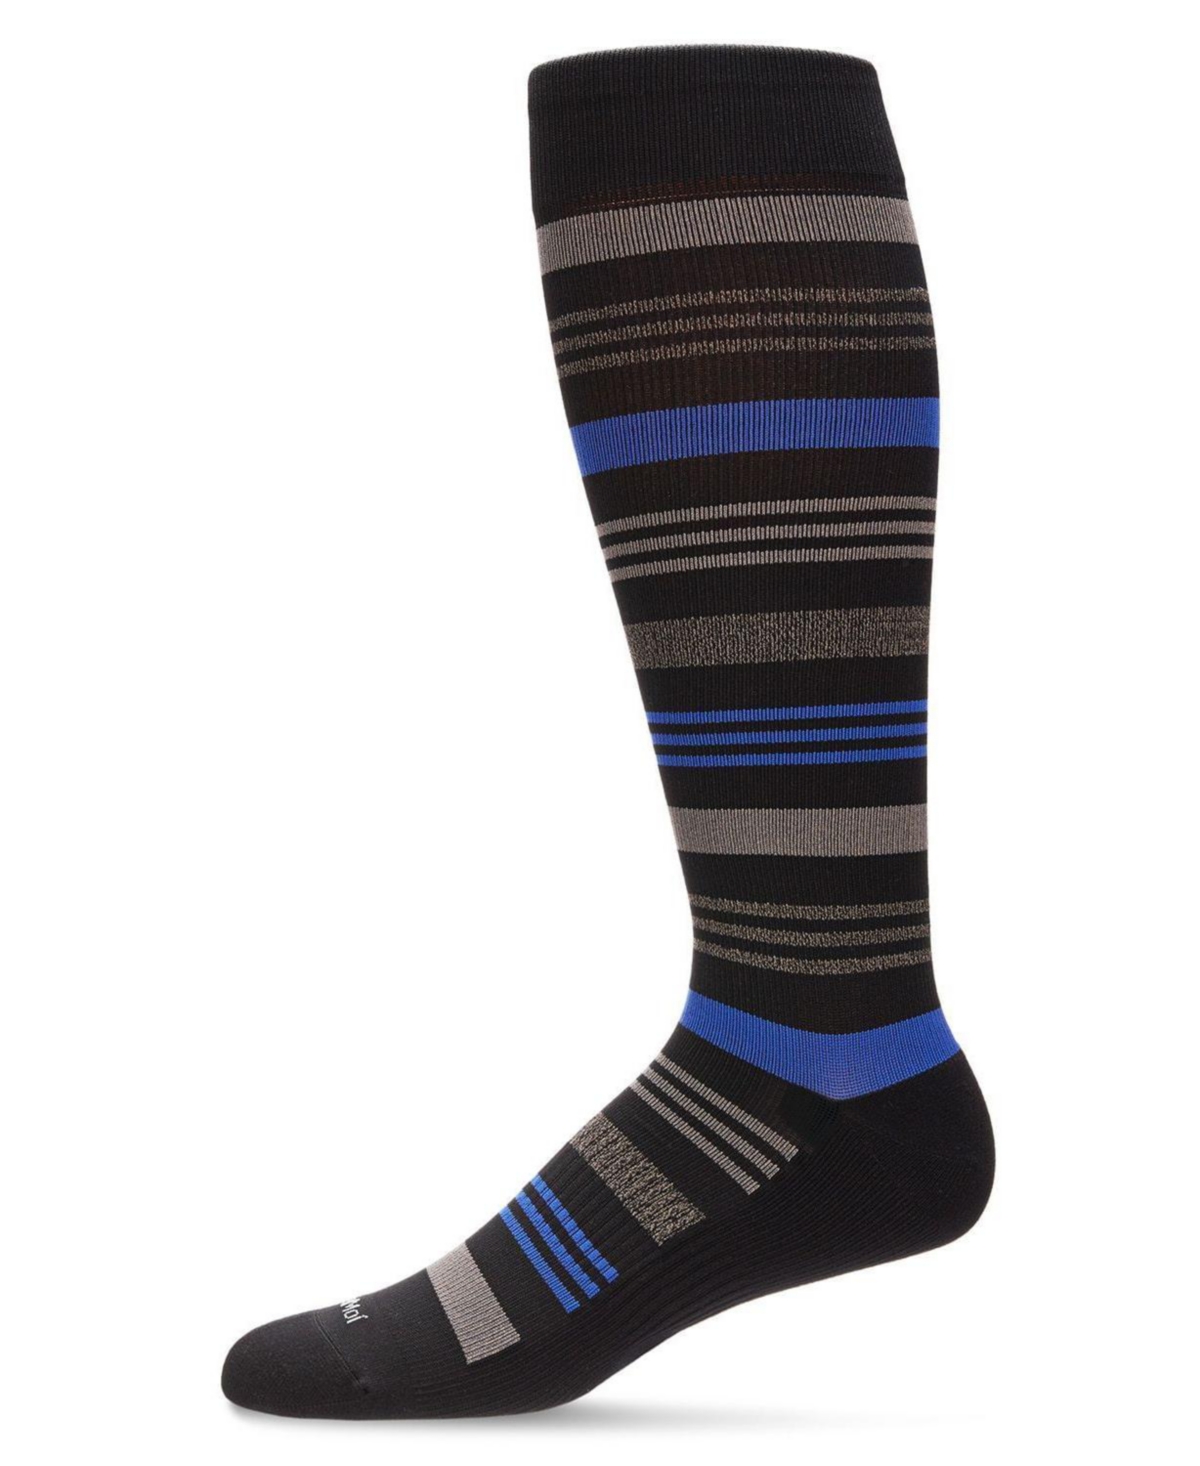 Men's Striped Nylon Compression Socks - Black